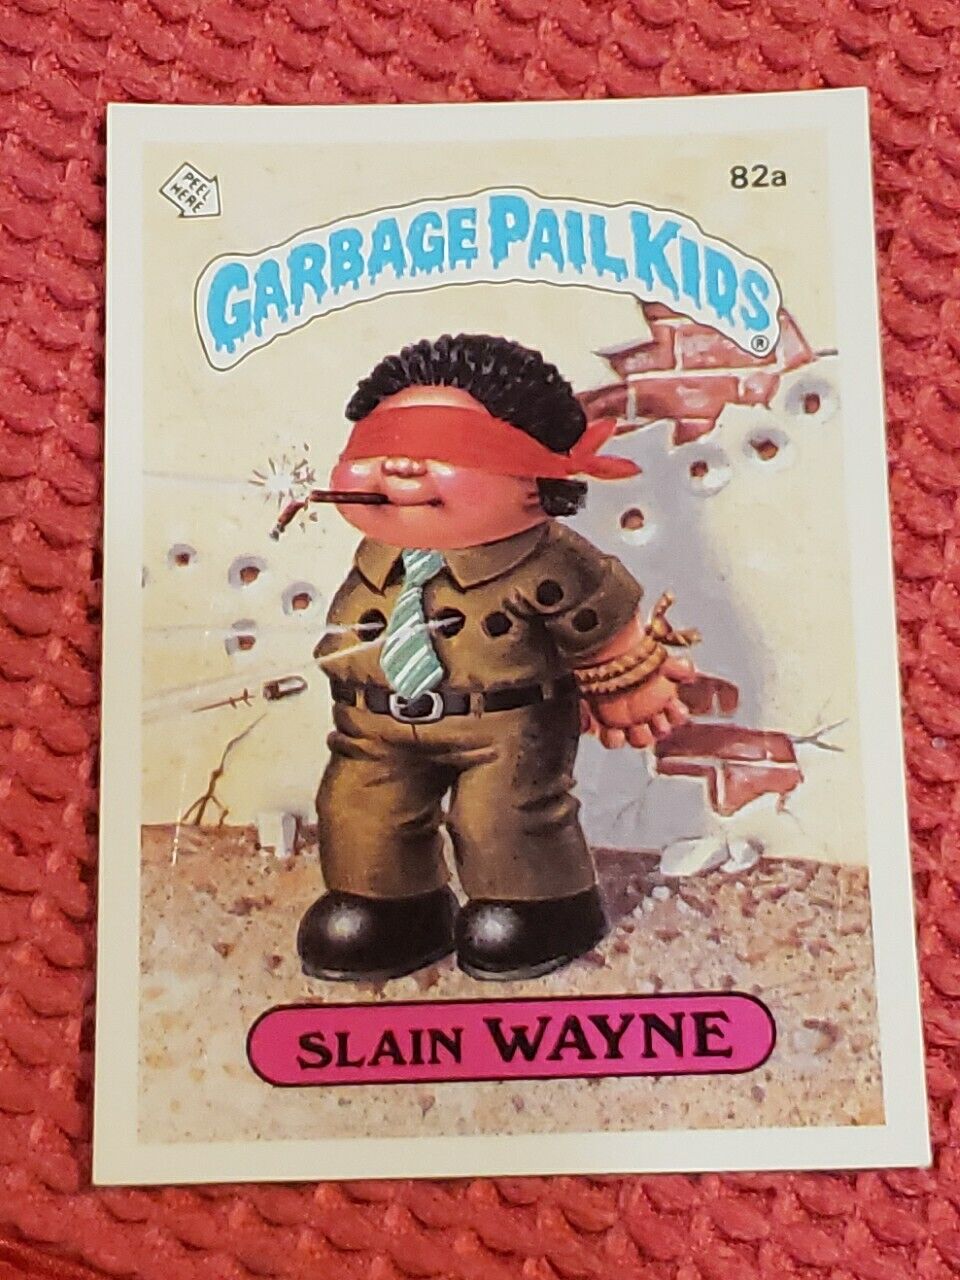 1985 Topps Garbage Pail Kids 2nd Series 2 \\GLOSSY BACK Card #82a Slain Wayne